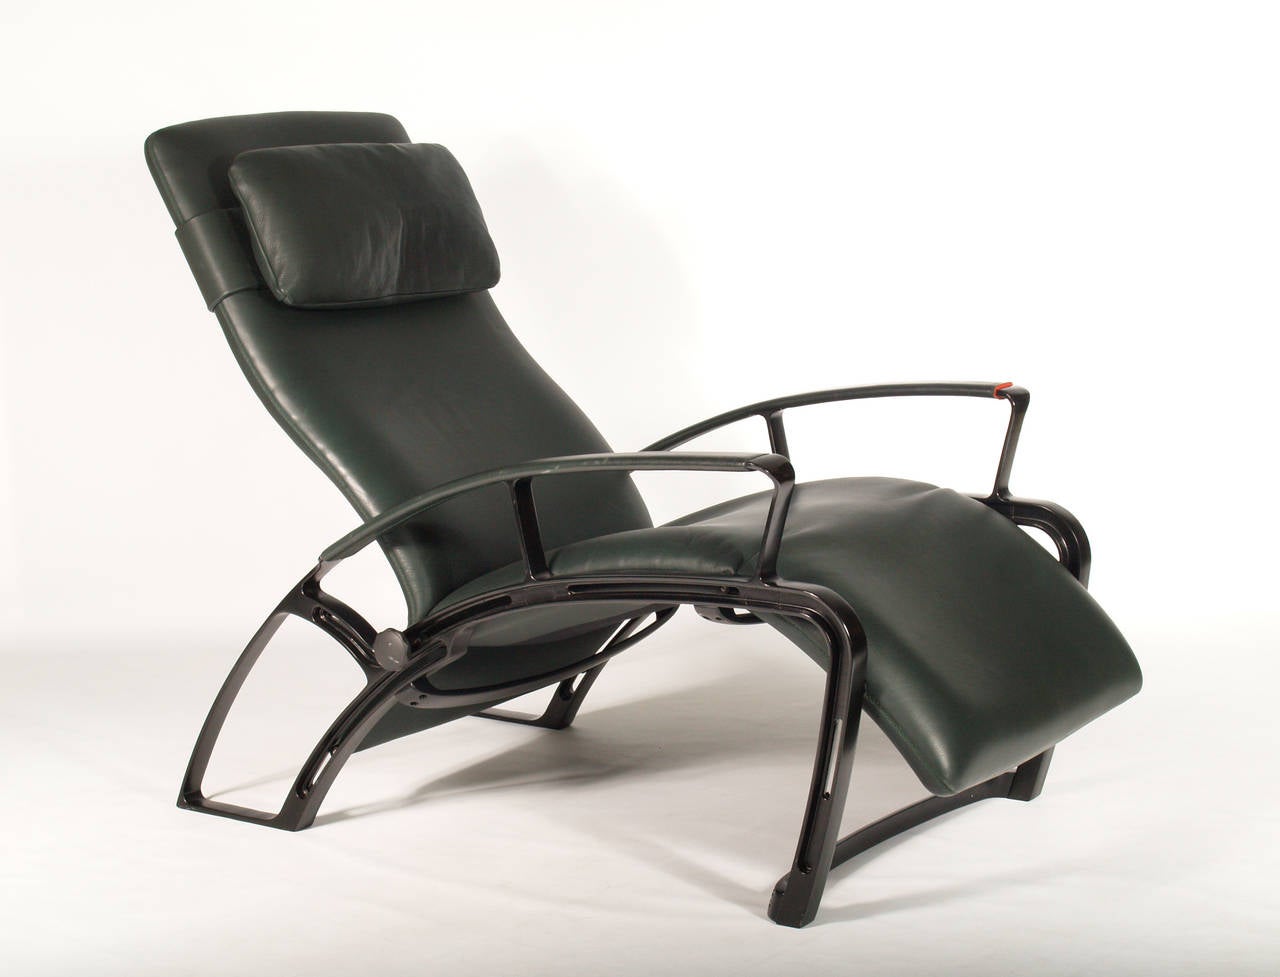 Lounge chair,
model